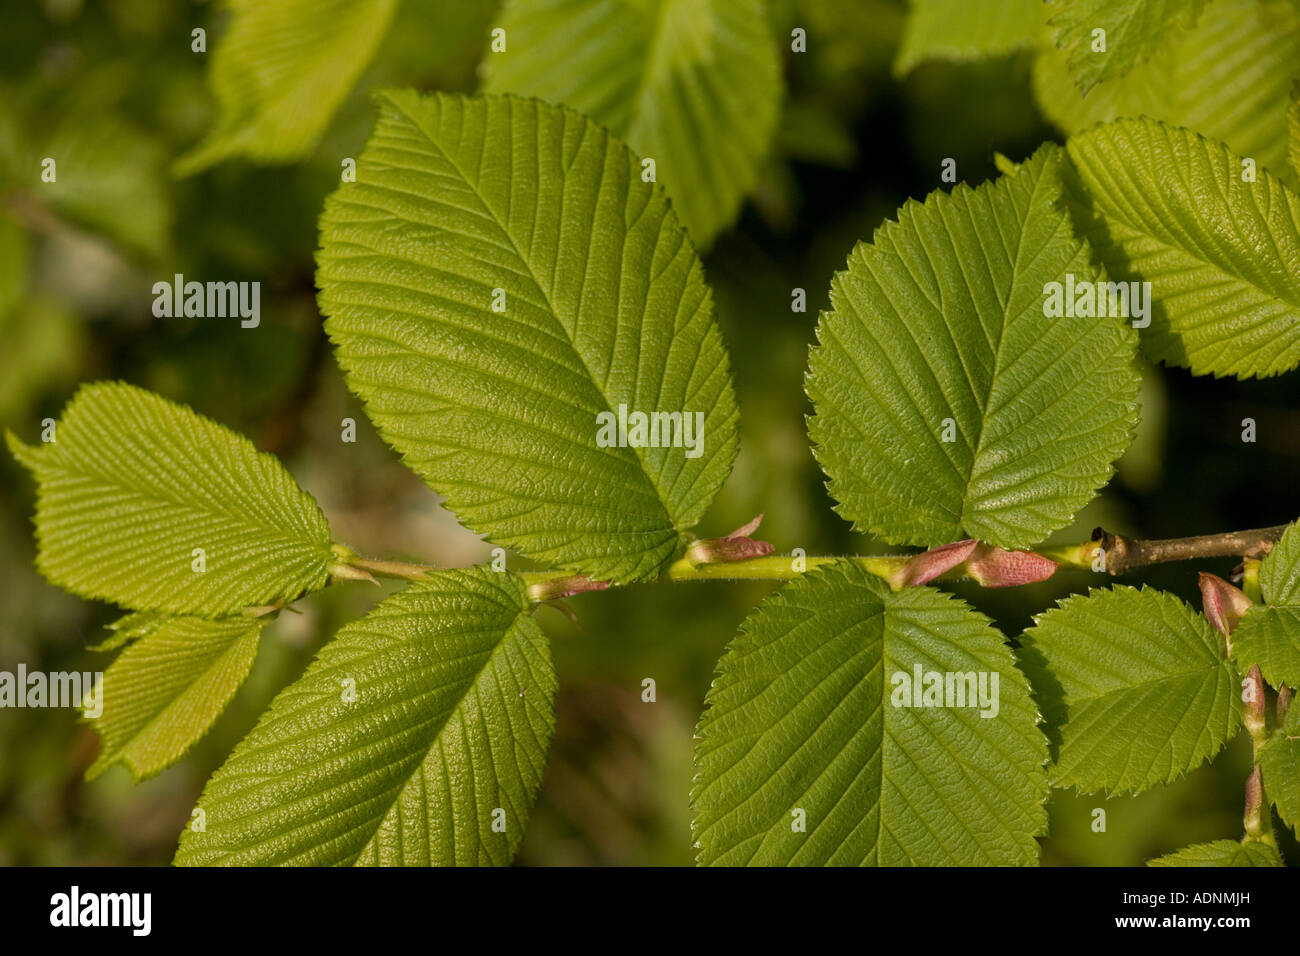 Wych elm (Ulmus glabra) leaves, close-up Stock Photo